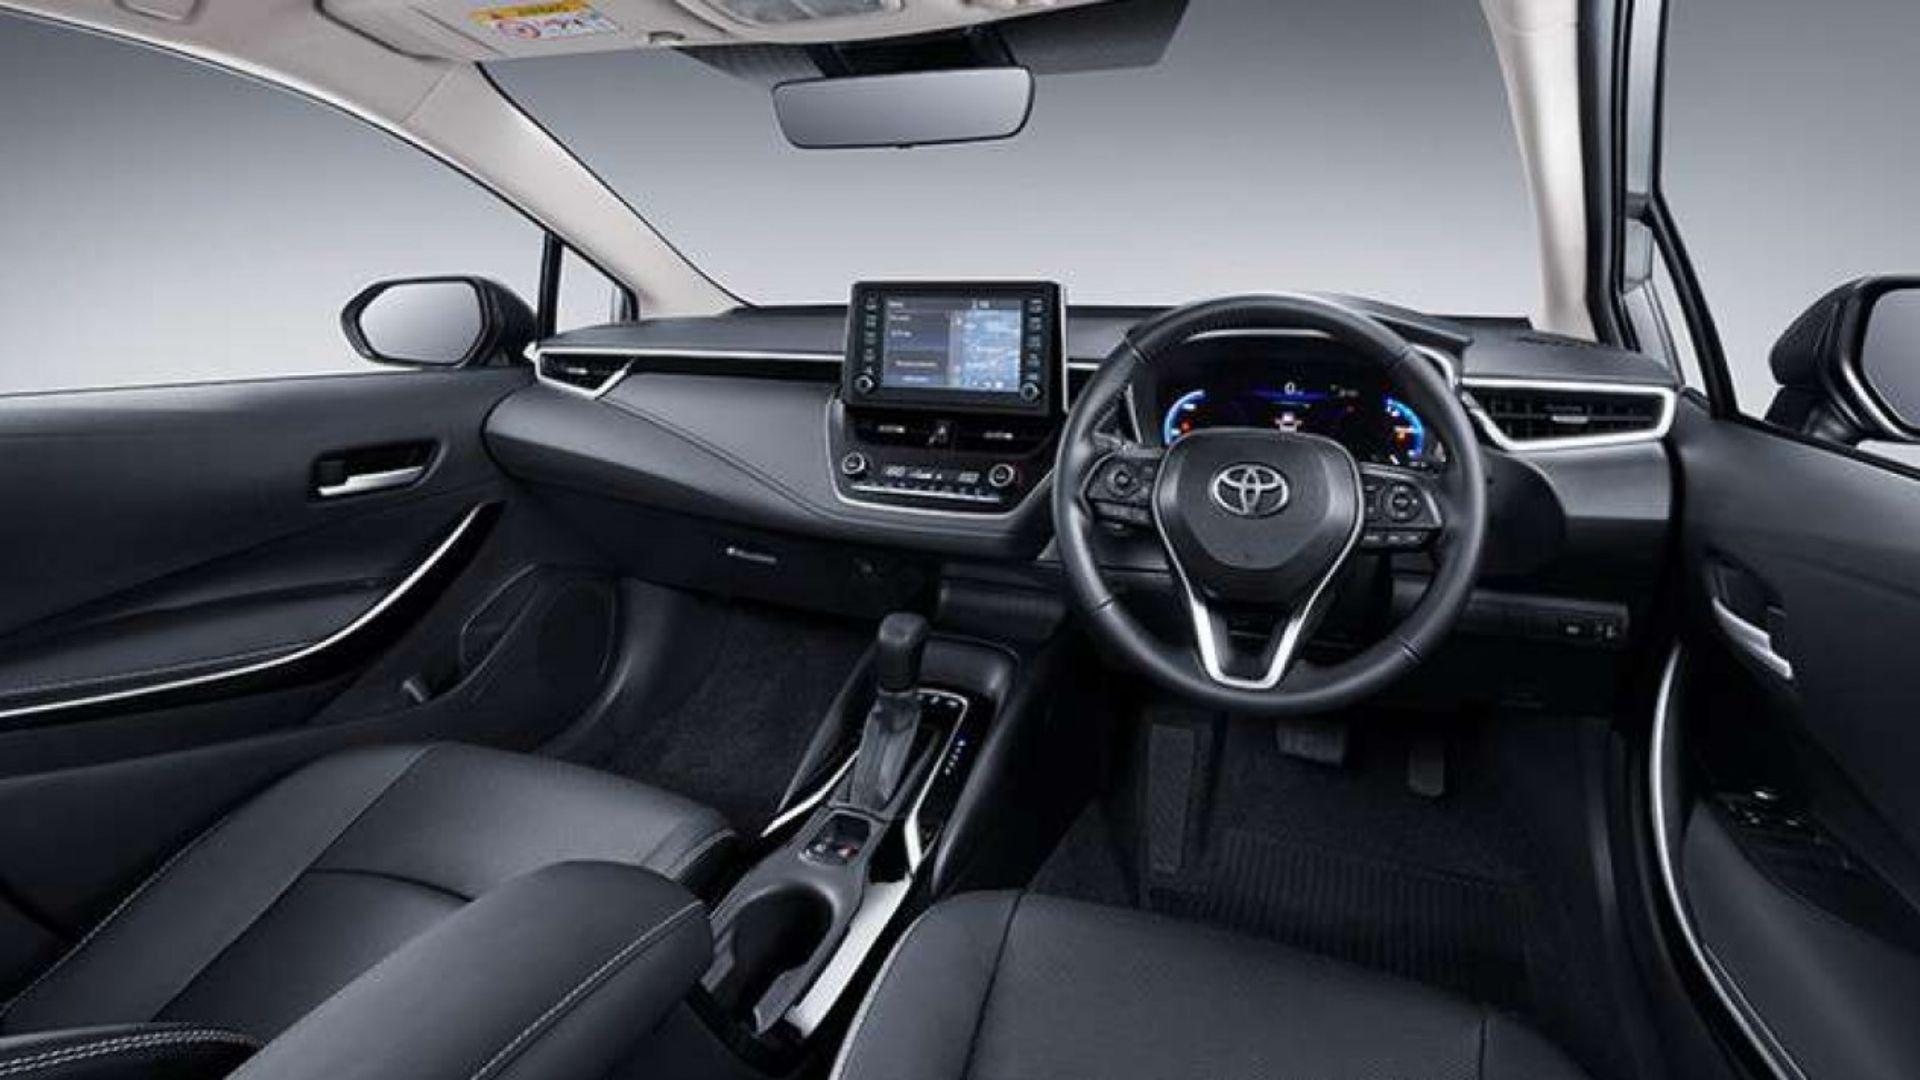 TRAC - Sedan - Toyota Altis - Interior 2.jpg